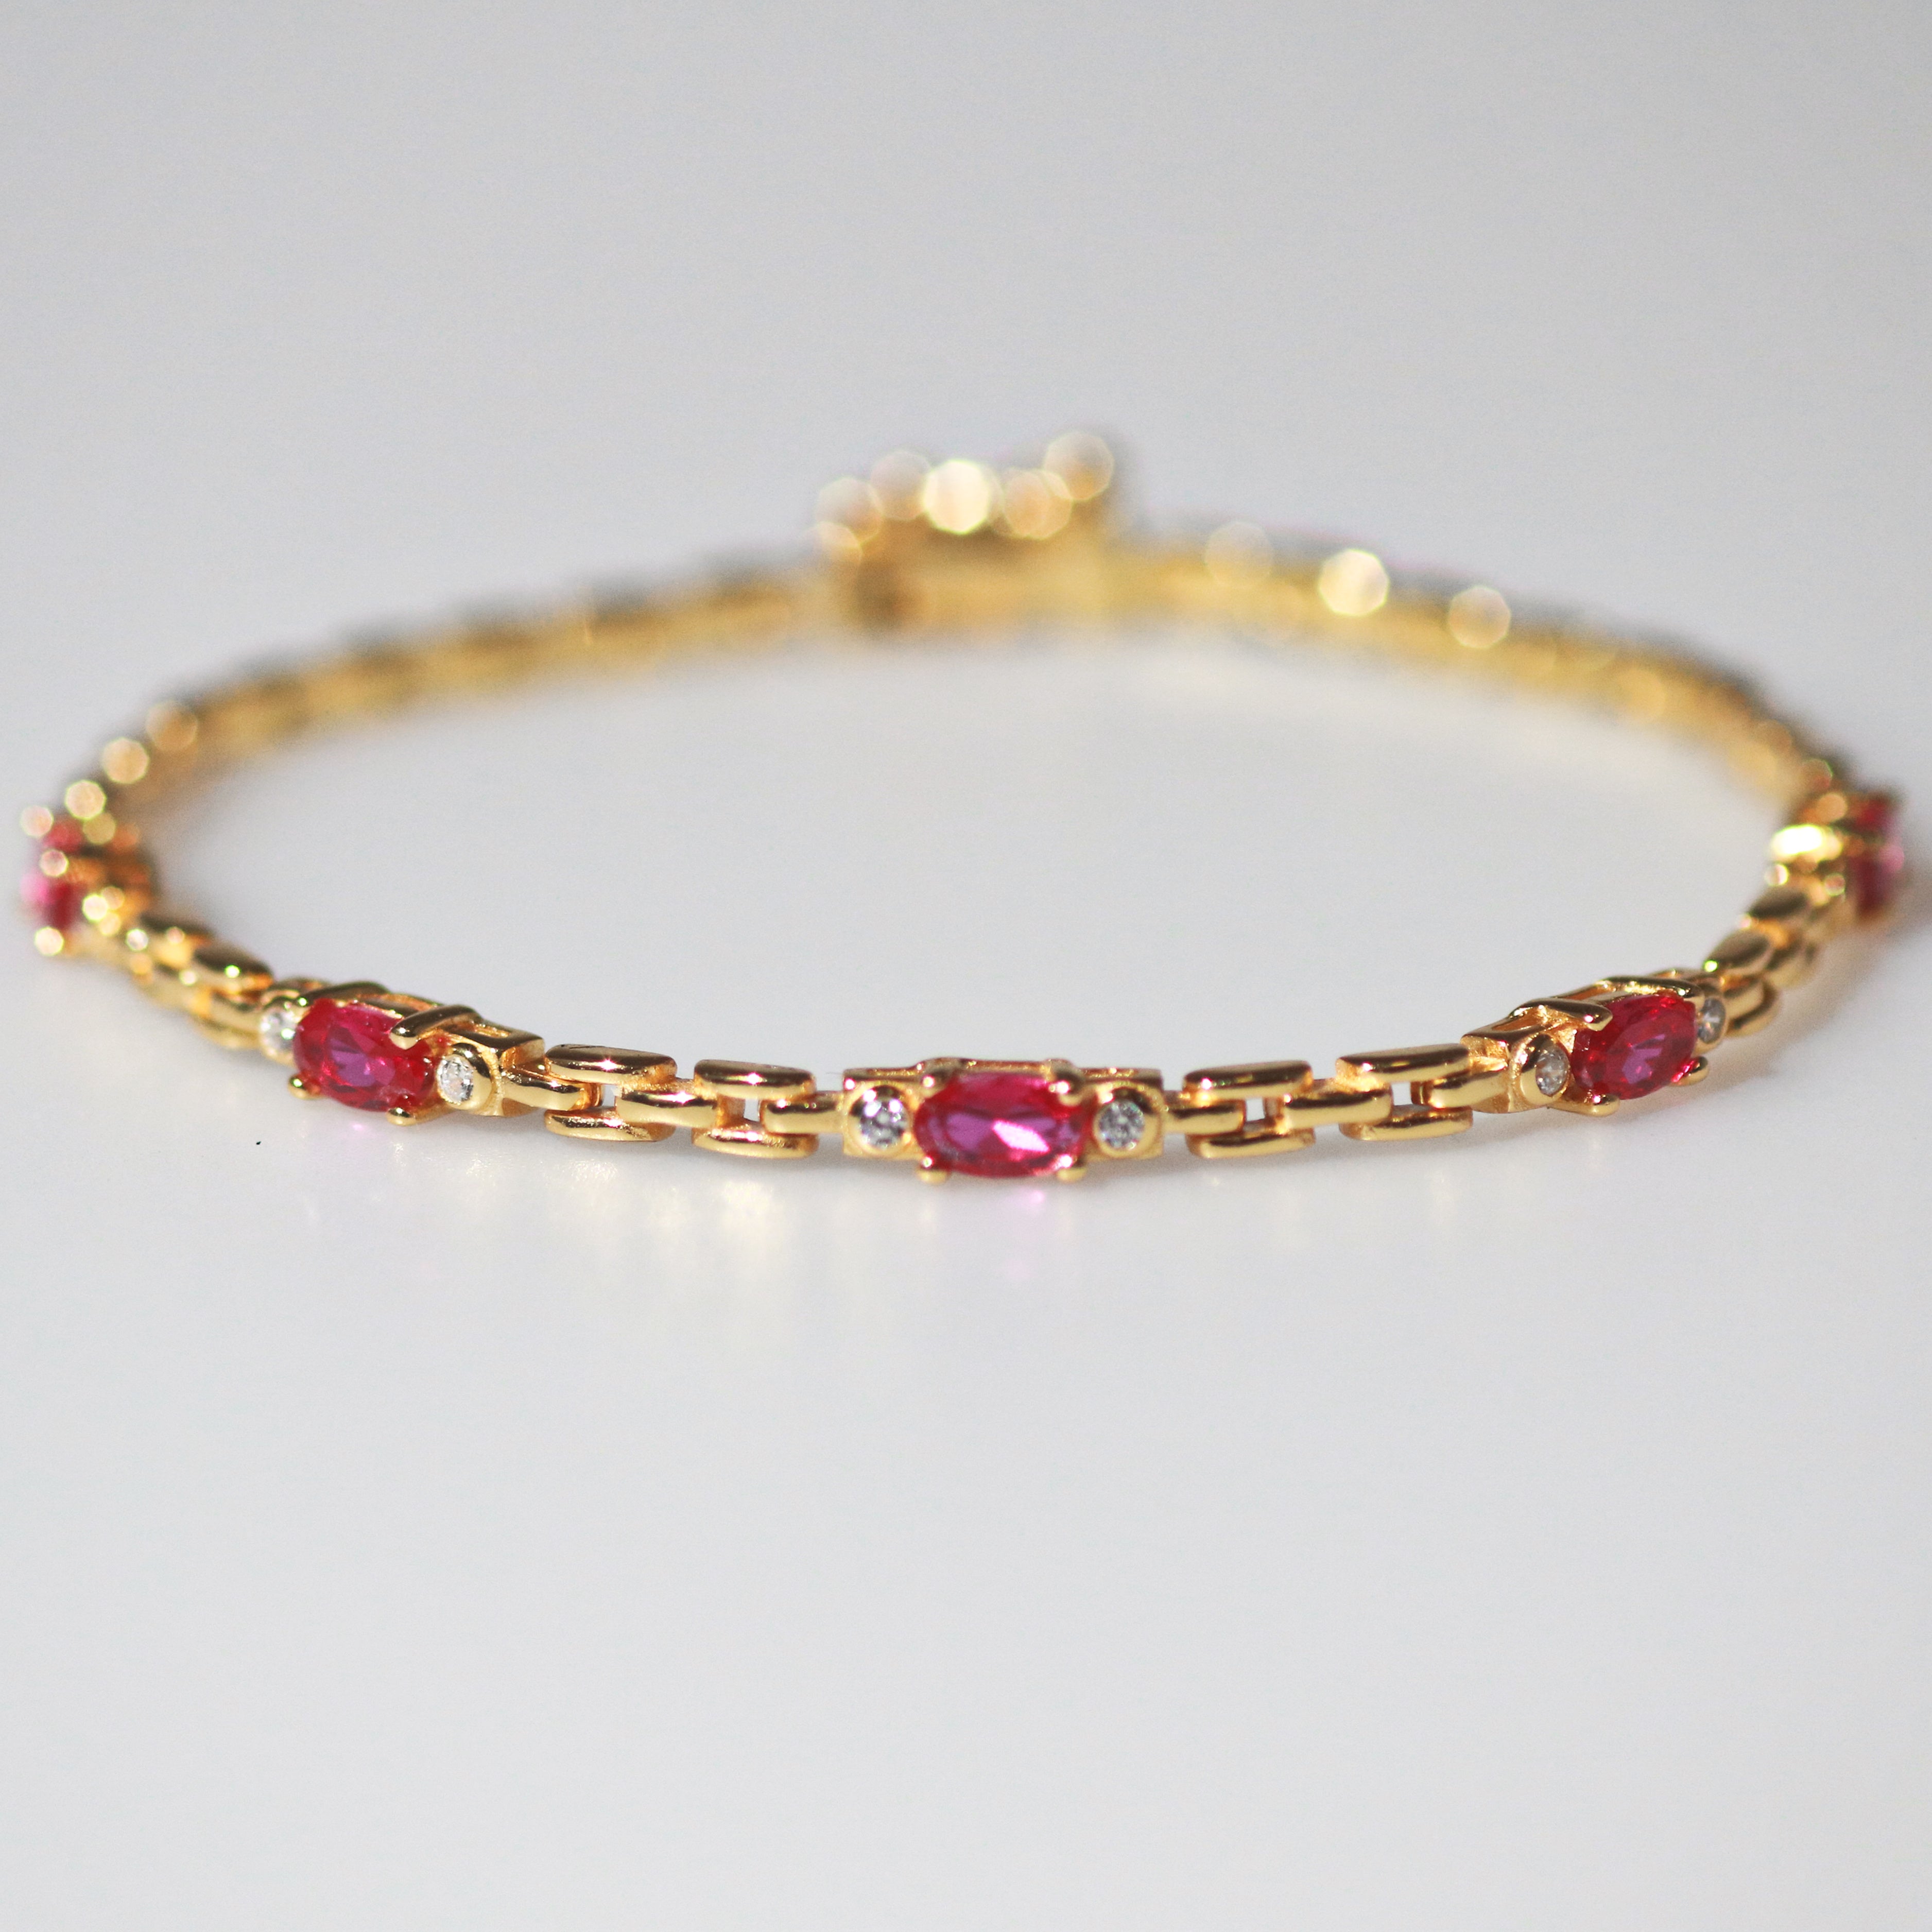 Meideya Jewelry Gold vermeil garnet bracelet with watch strap design